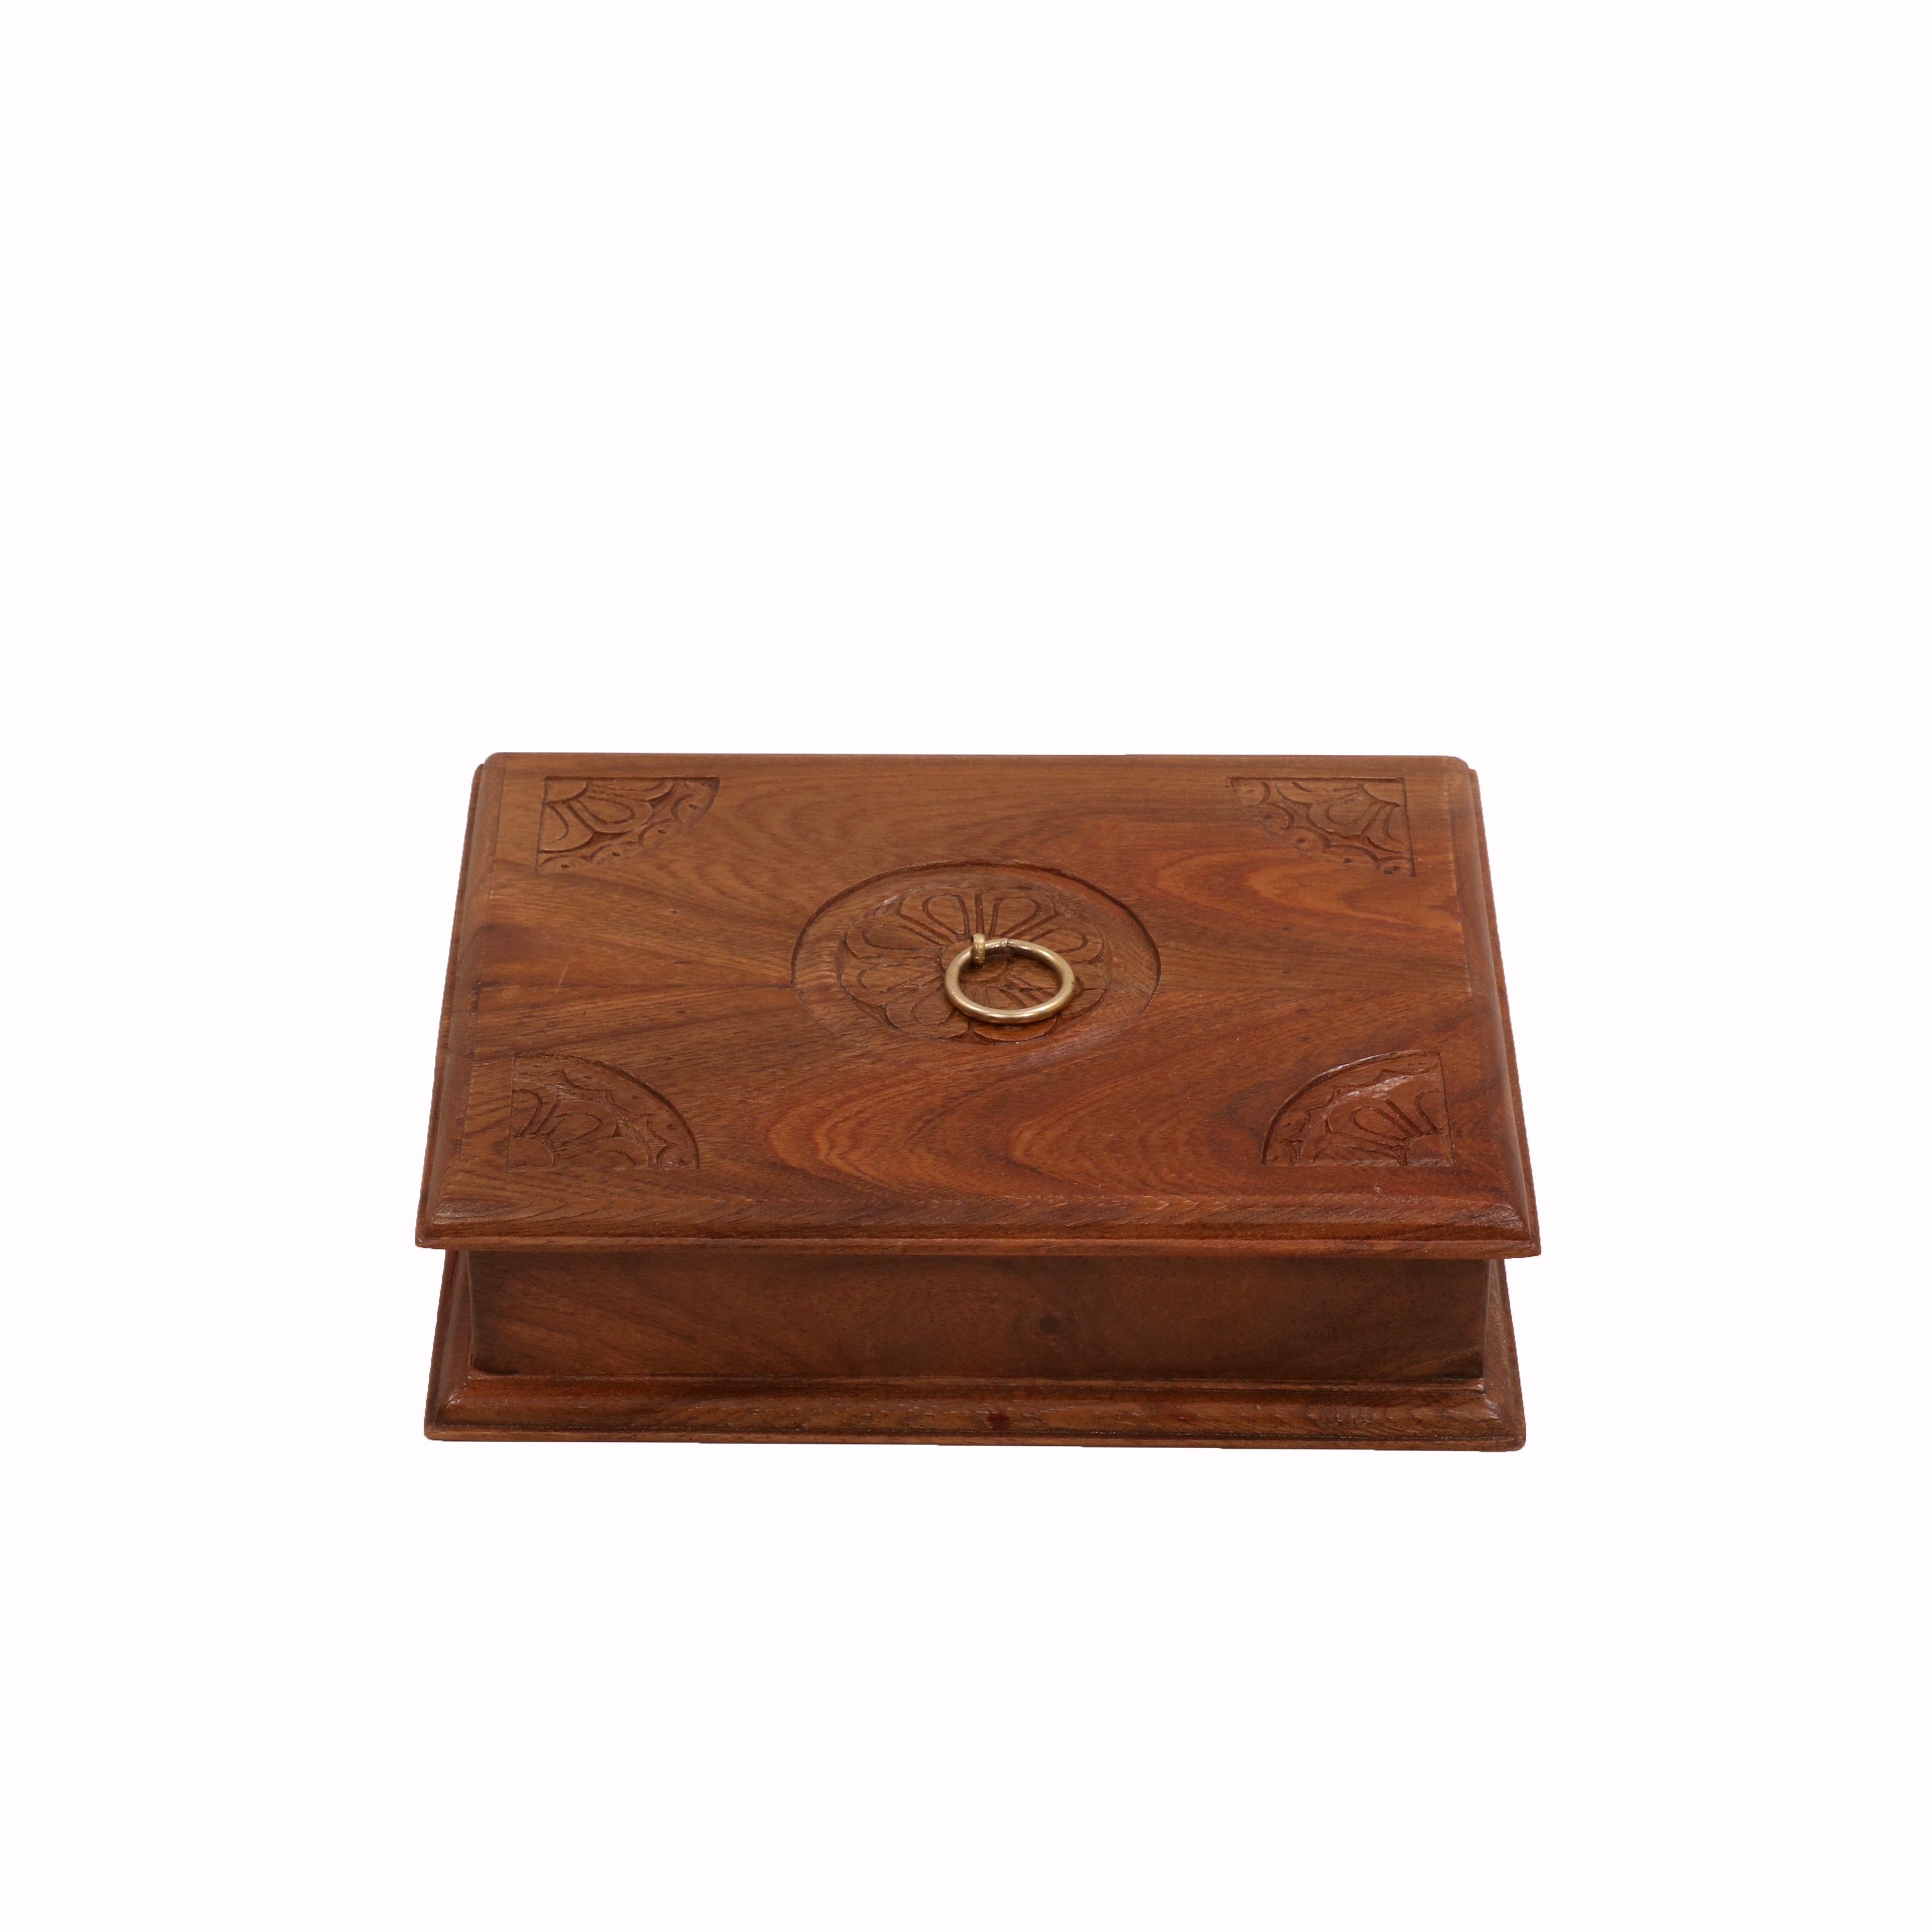 Petal Inspired Wooden Box Wooden Box